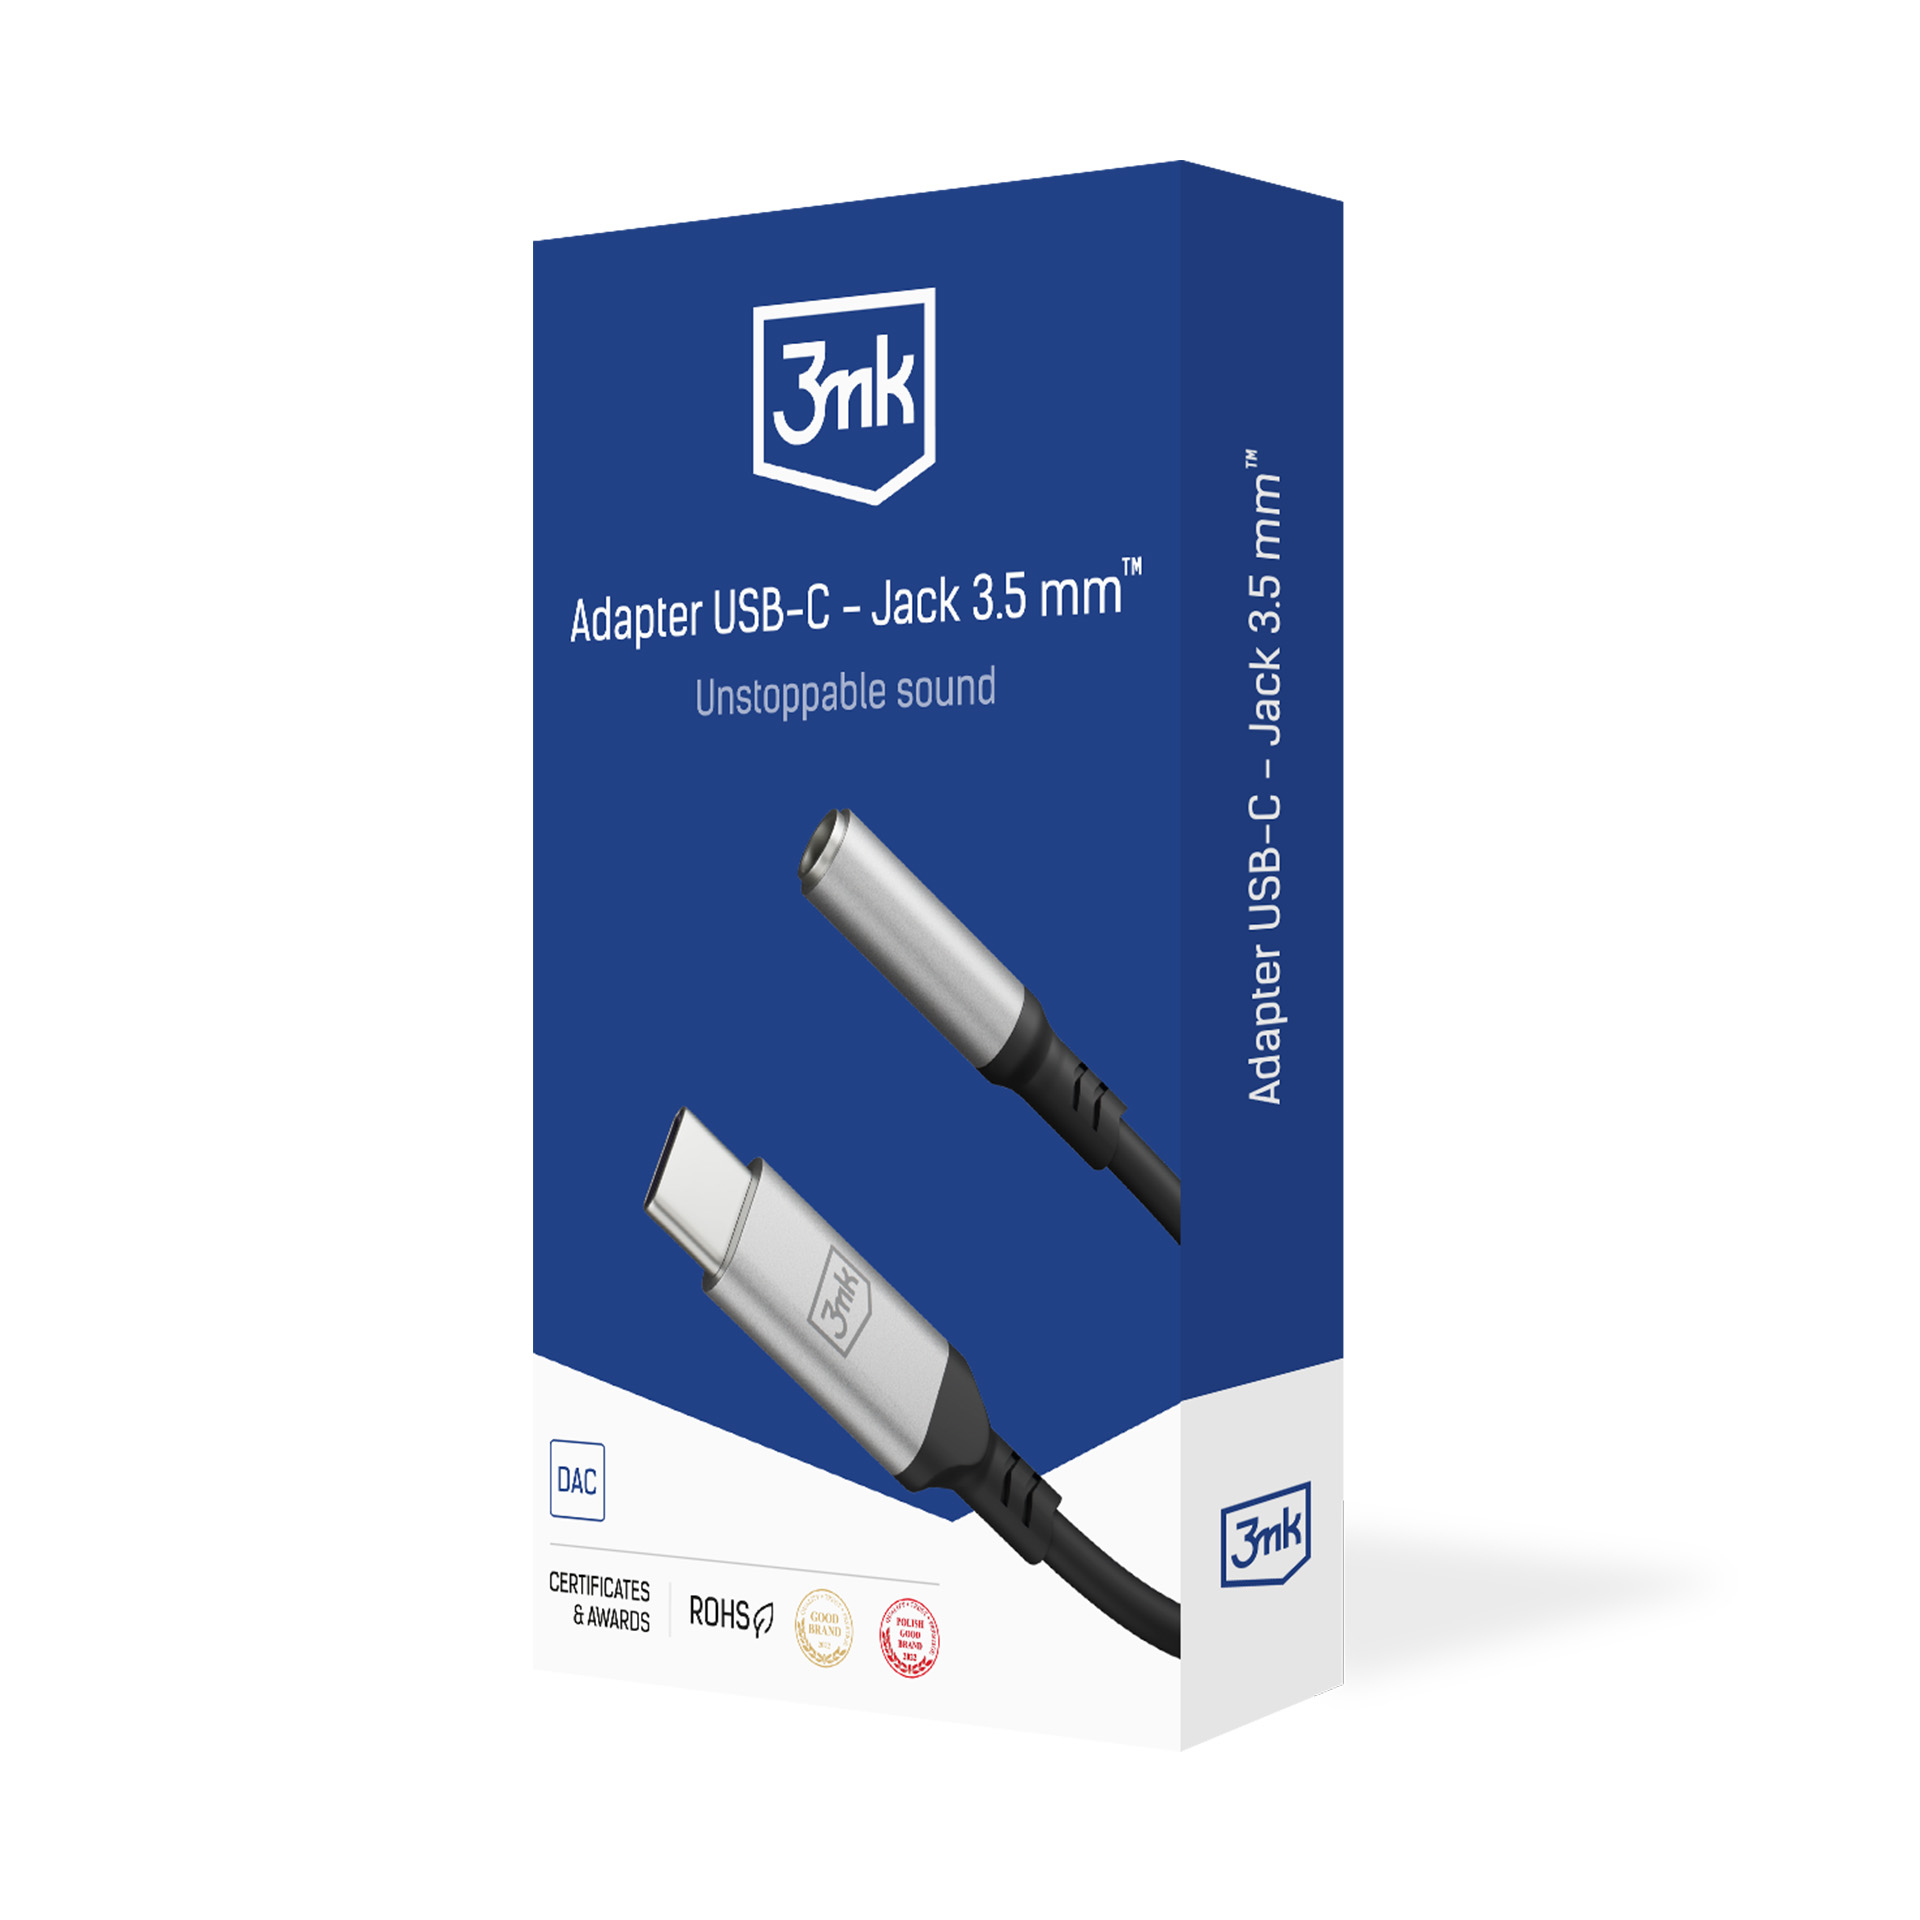 3mk adapter USB-C - Jack 3,5mm / 2